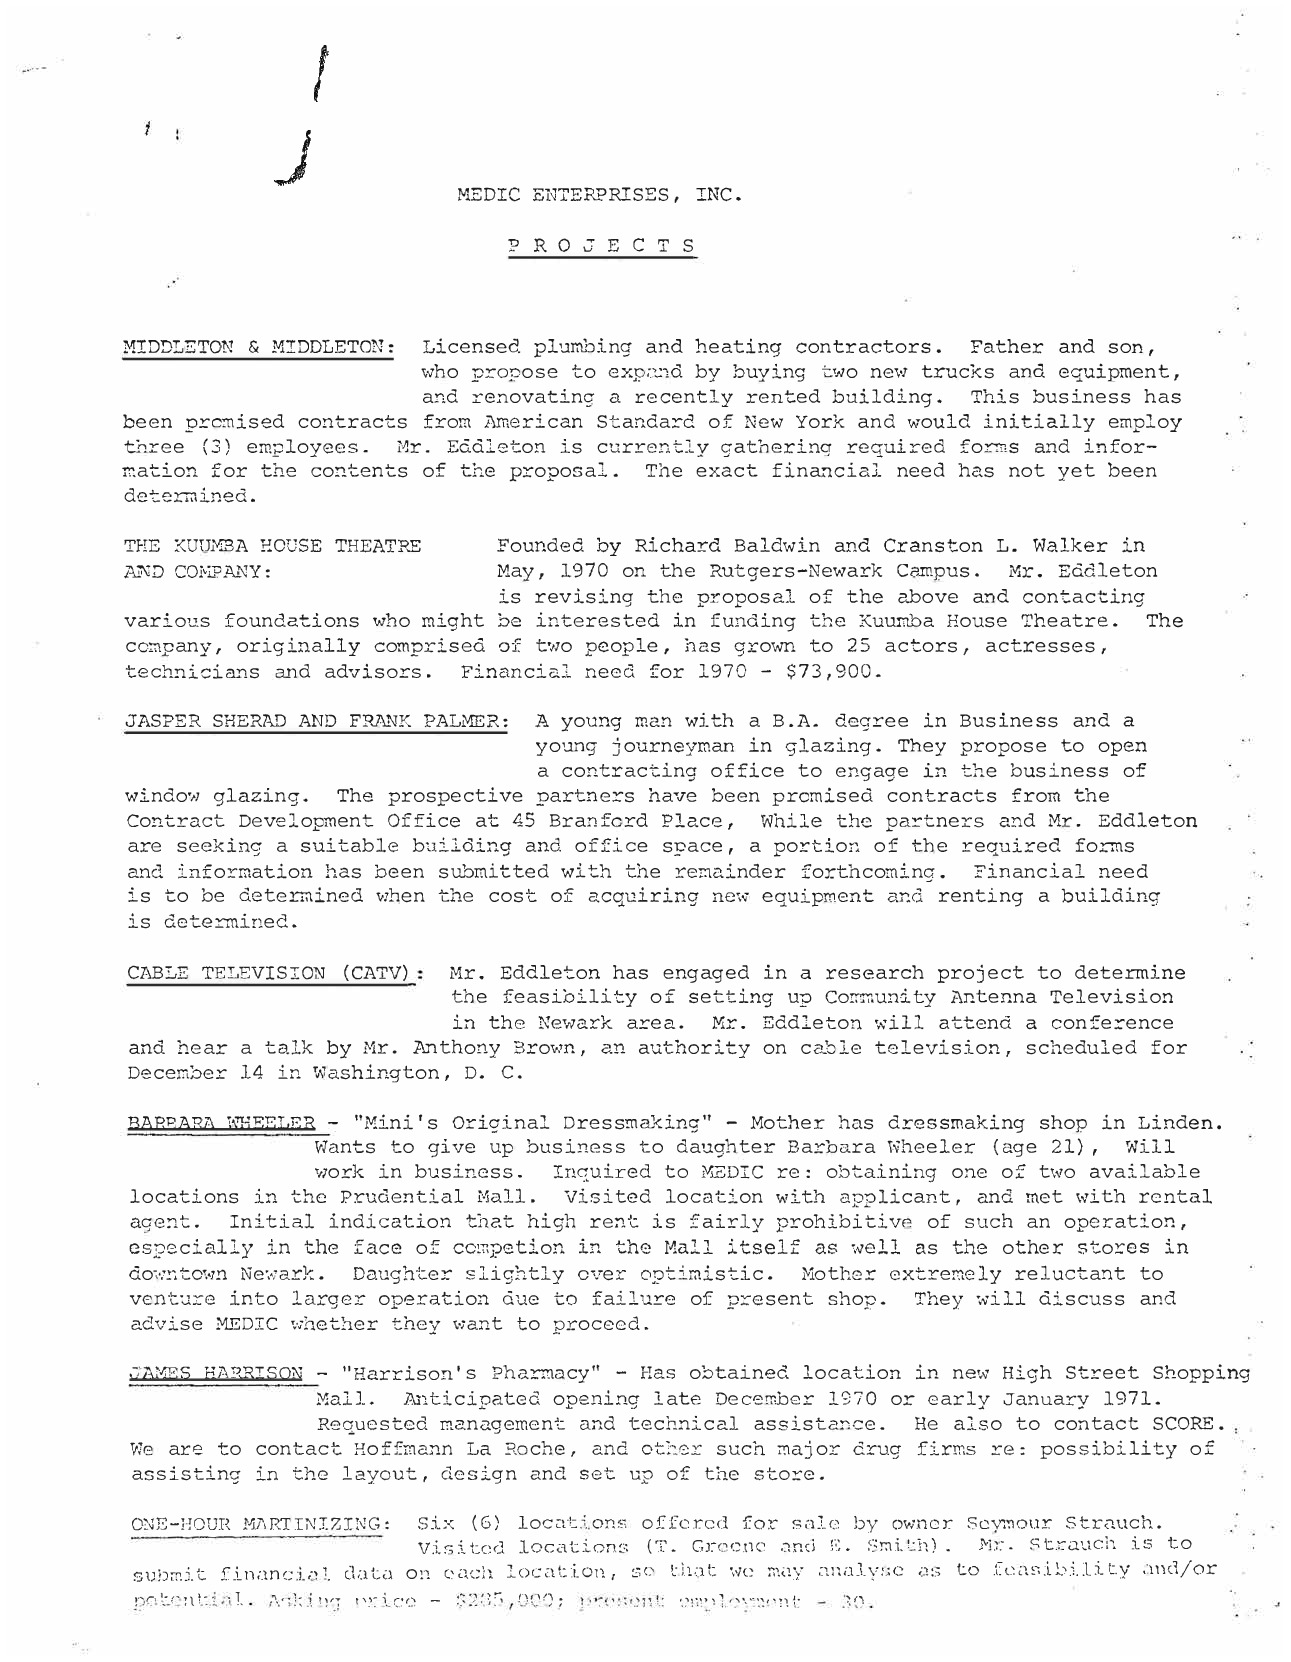 MEDIC Project List (1970)